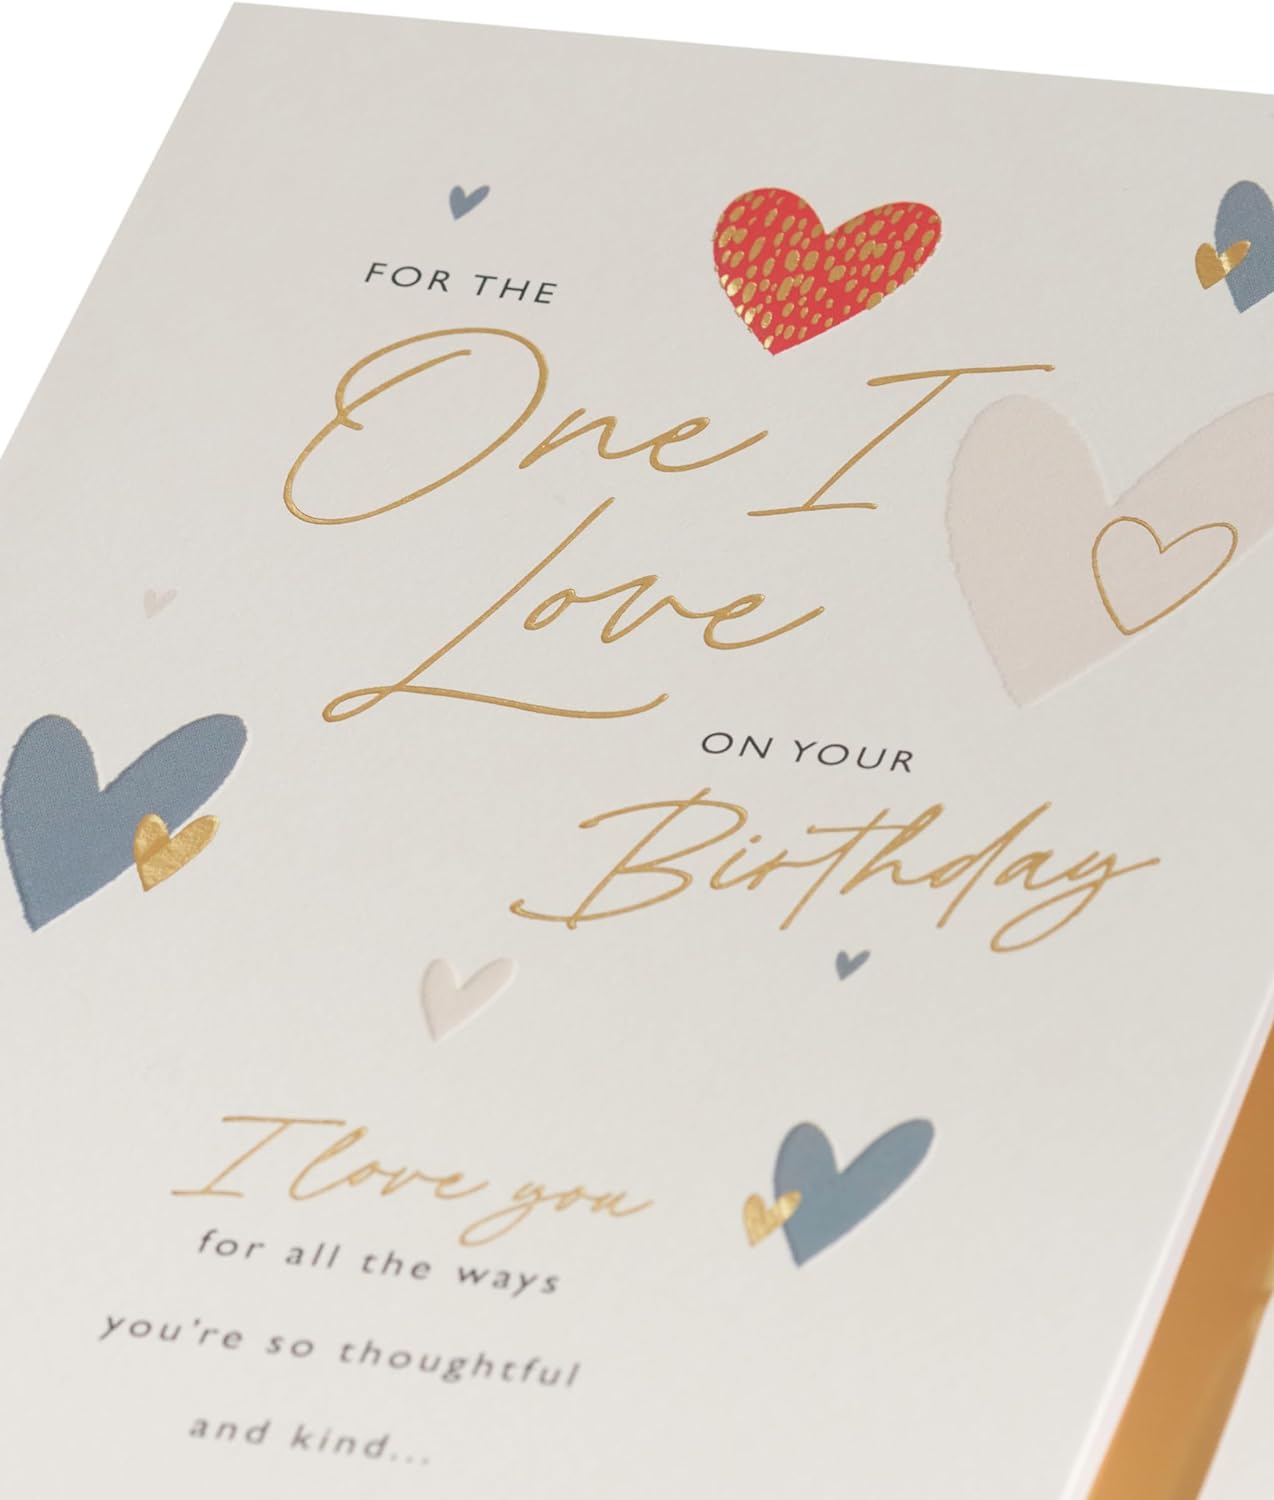 Heartfelt & Hearts Design The One I Love Birthday Card